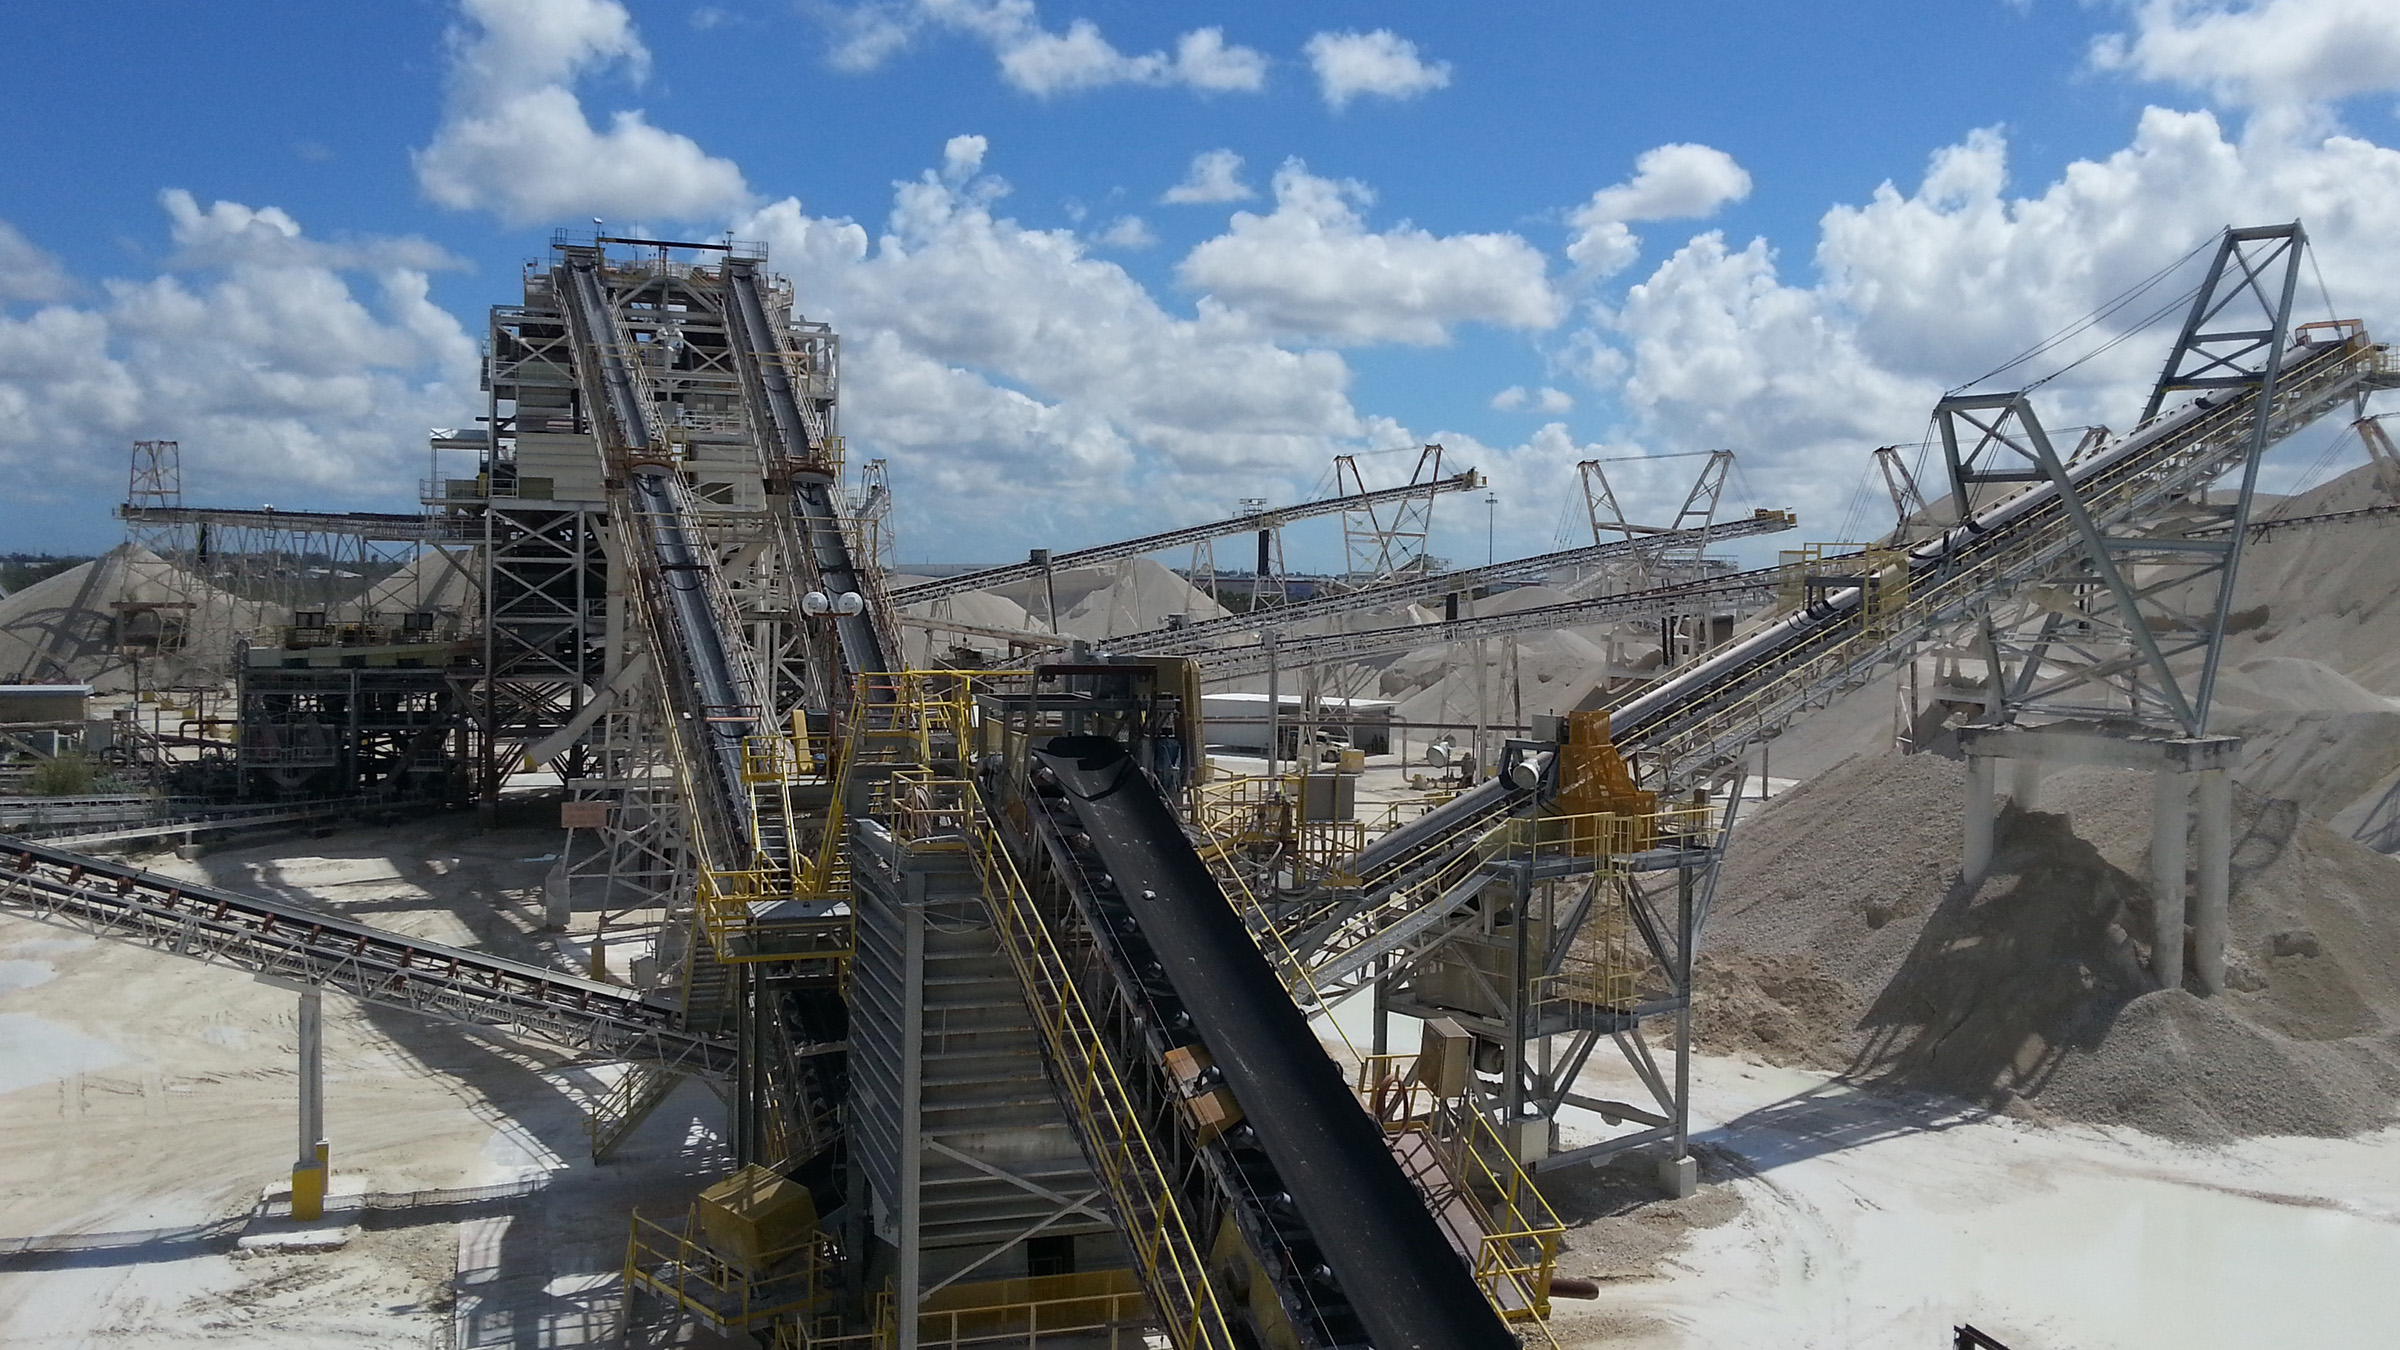 Cemex Florida cement plant conveyor system for aggregates